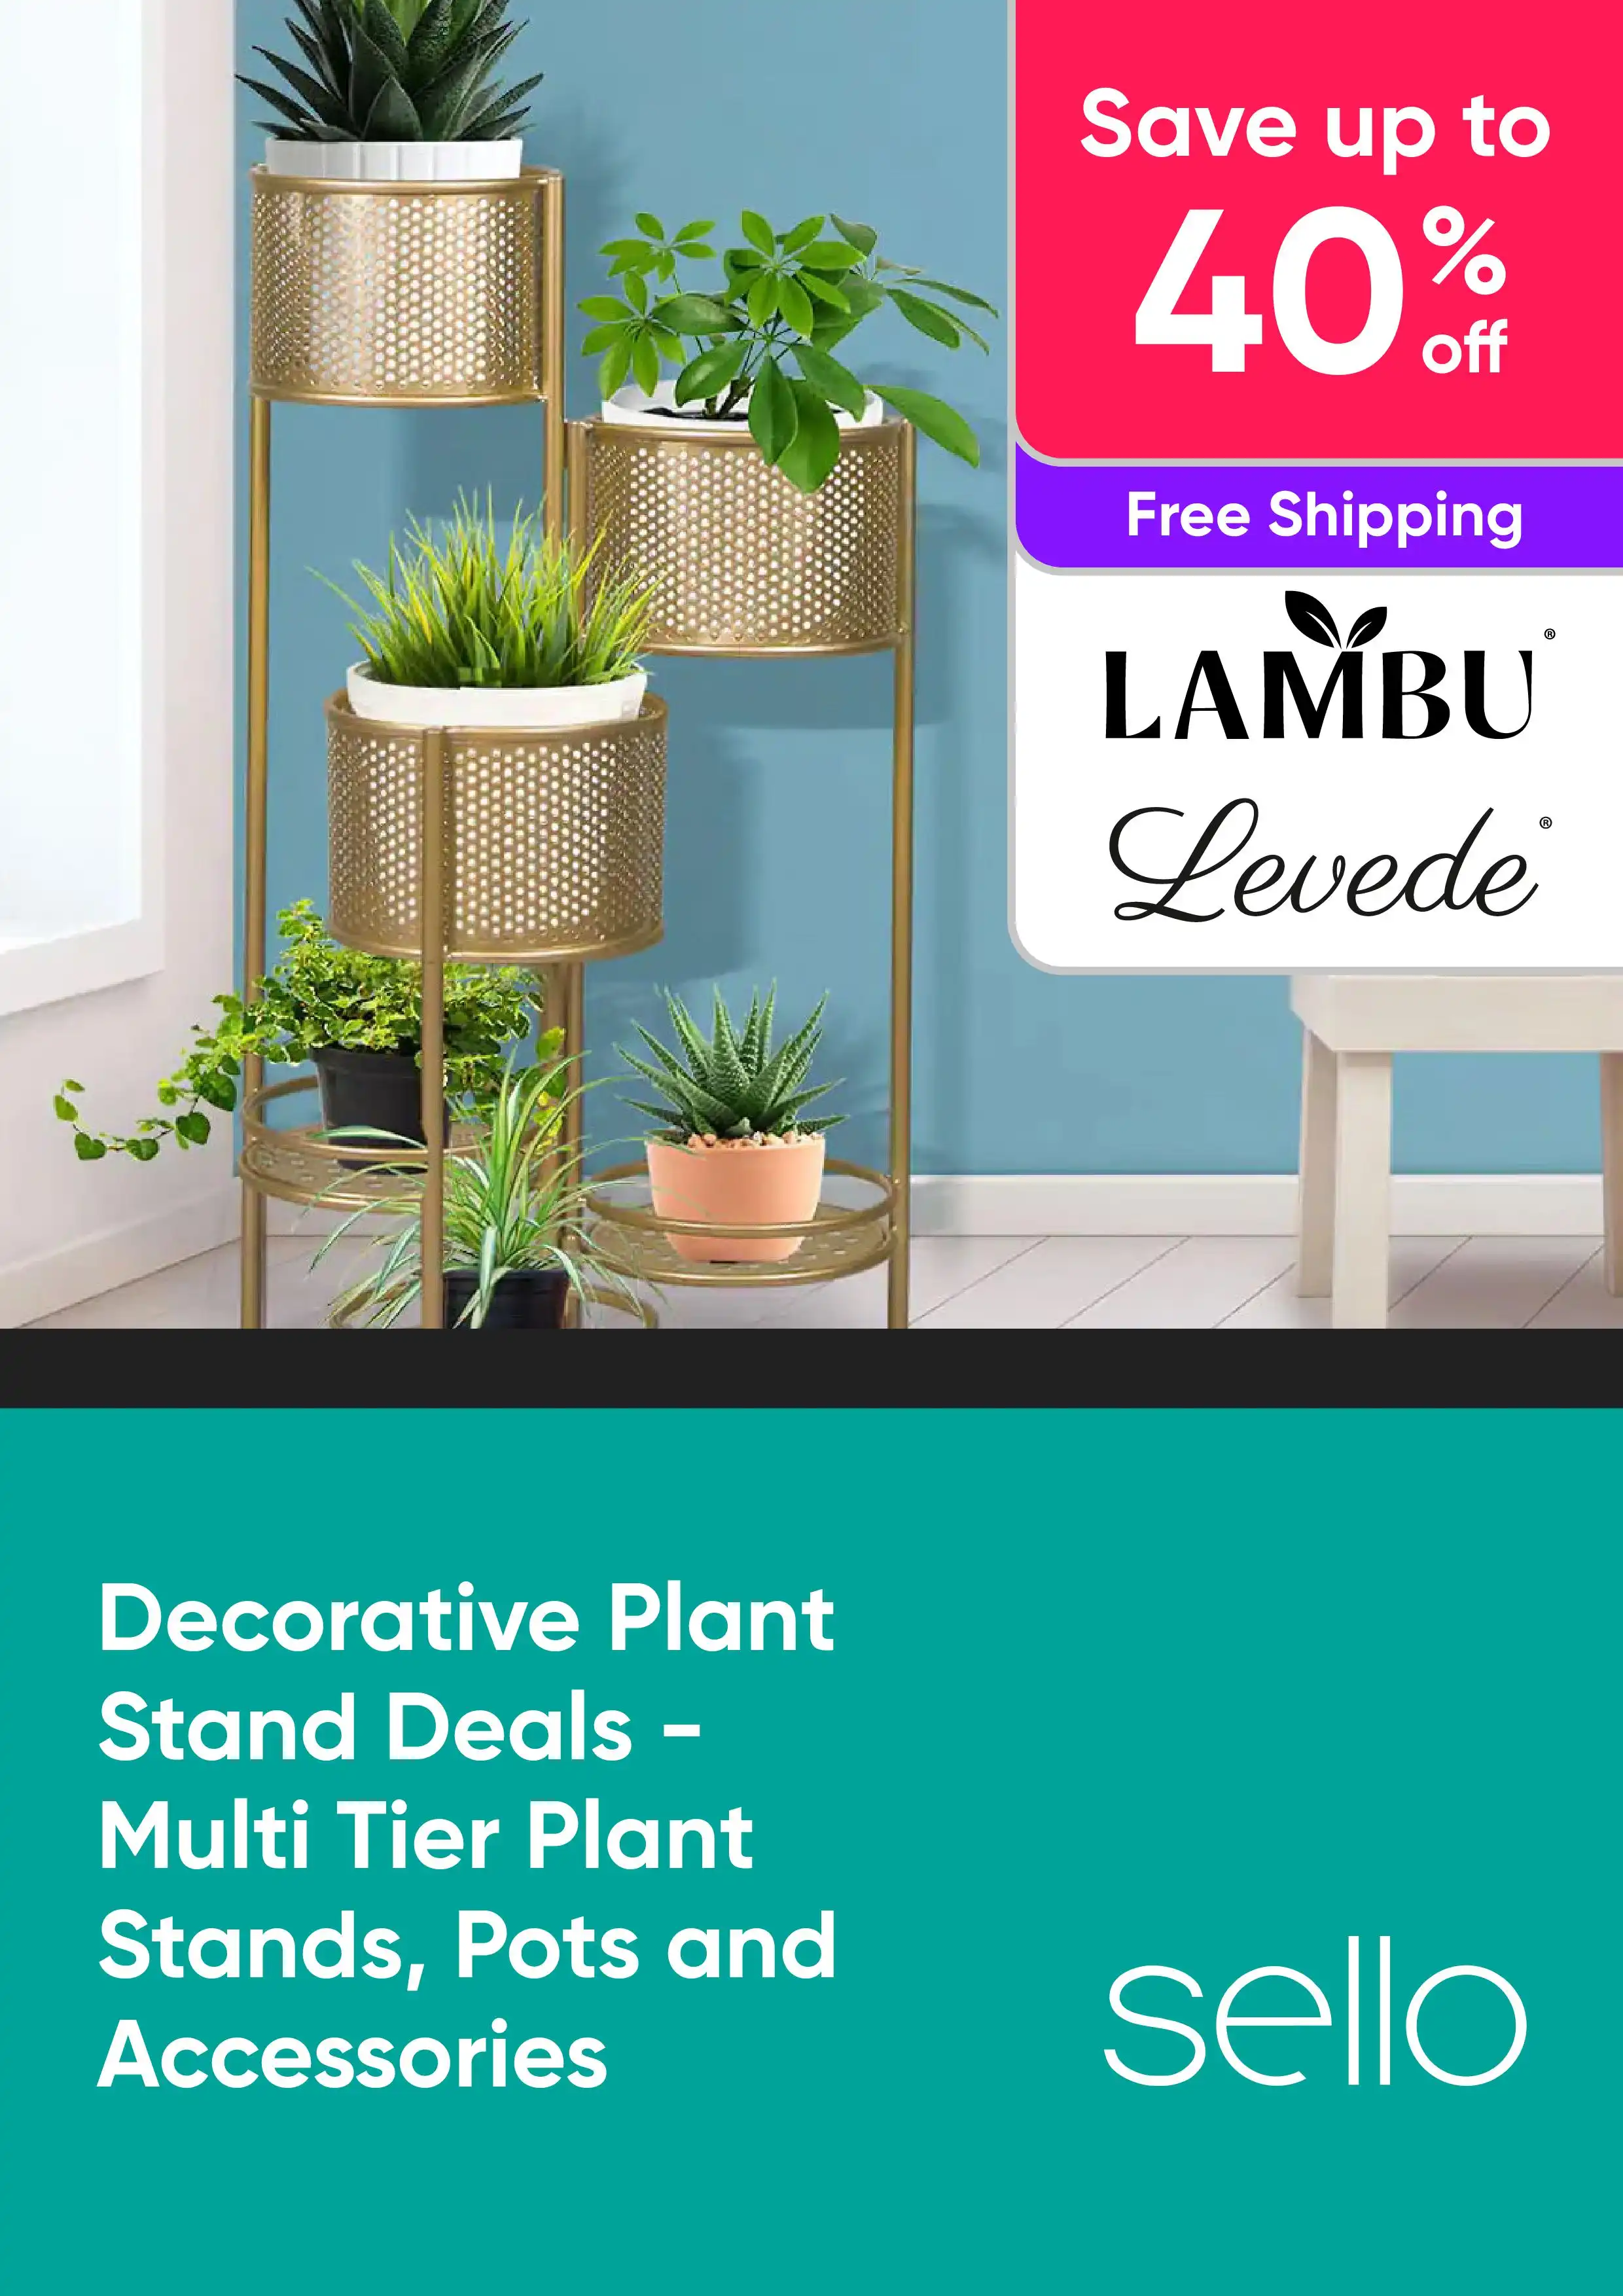 Decorative Plant Stands Deals - Multi Tier Plant Stands, Pots and Accessories - Lambu, Levede - Up to 40% Off